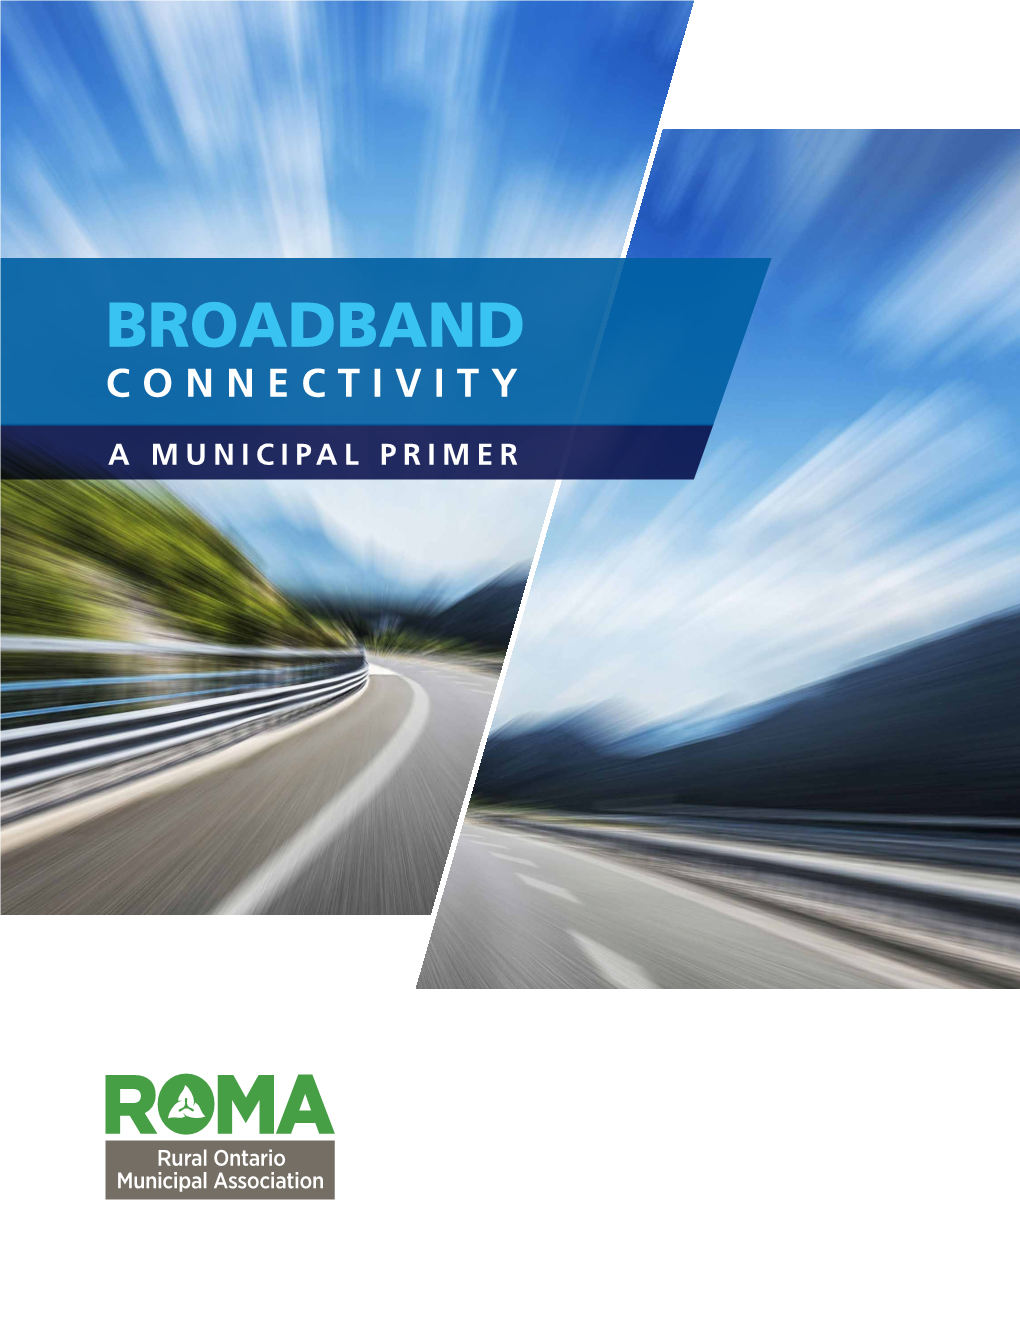 Broadband Connectivity | a Municipal Primer 2 the Purpose of the Connectivity Primer